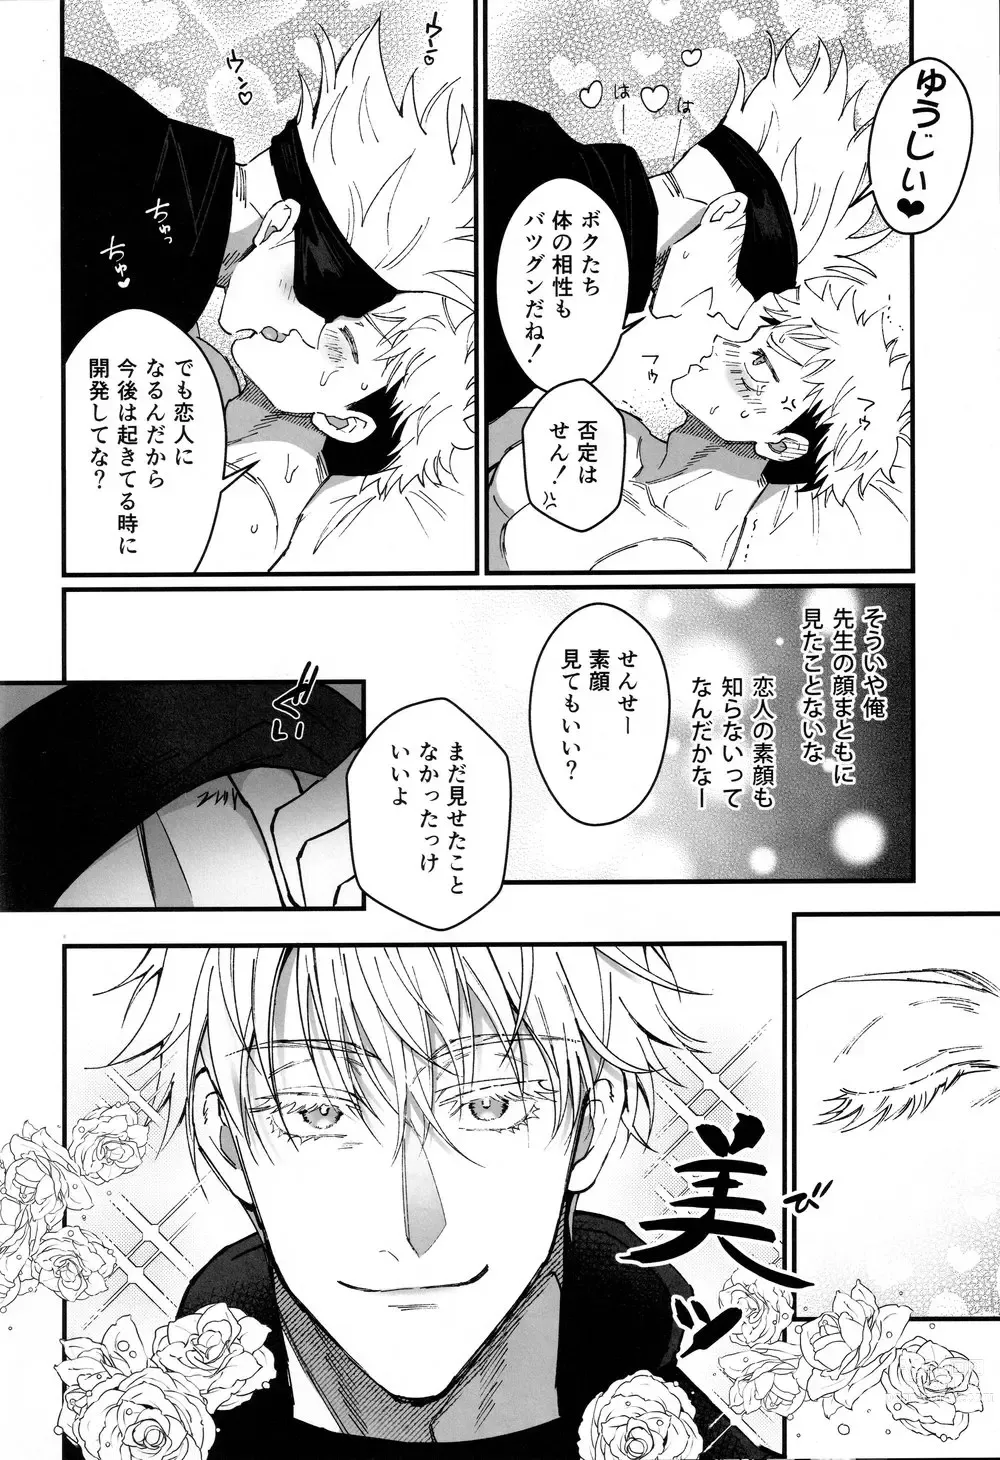 Page 28 of doujinshi Gachikoi Monster